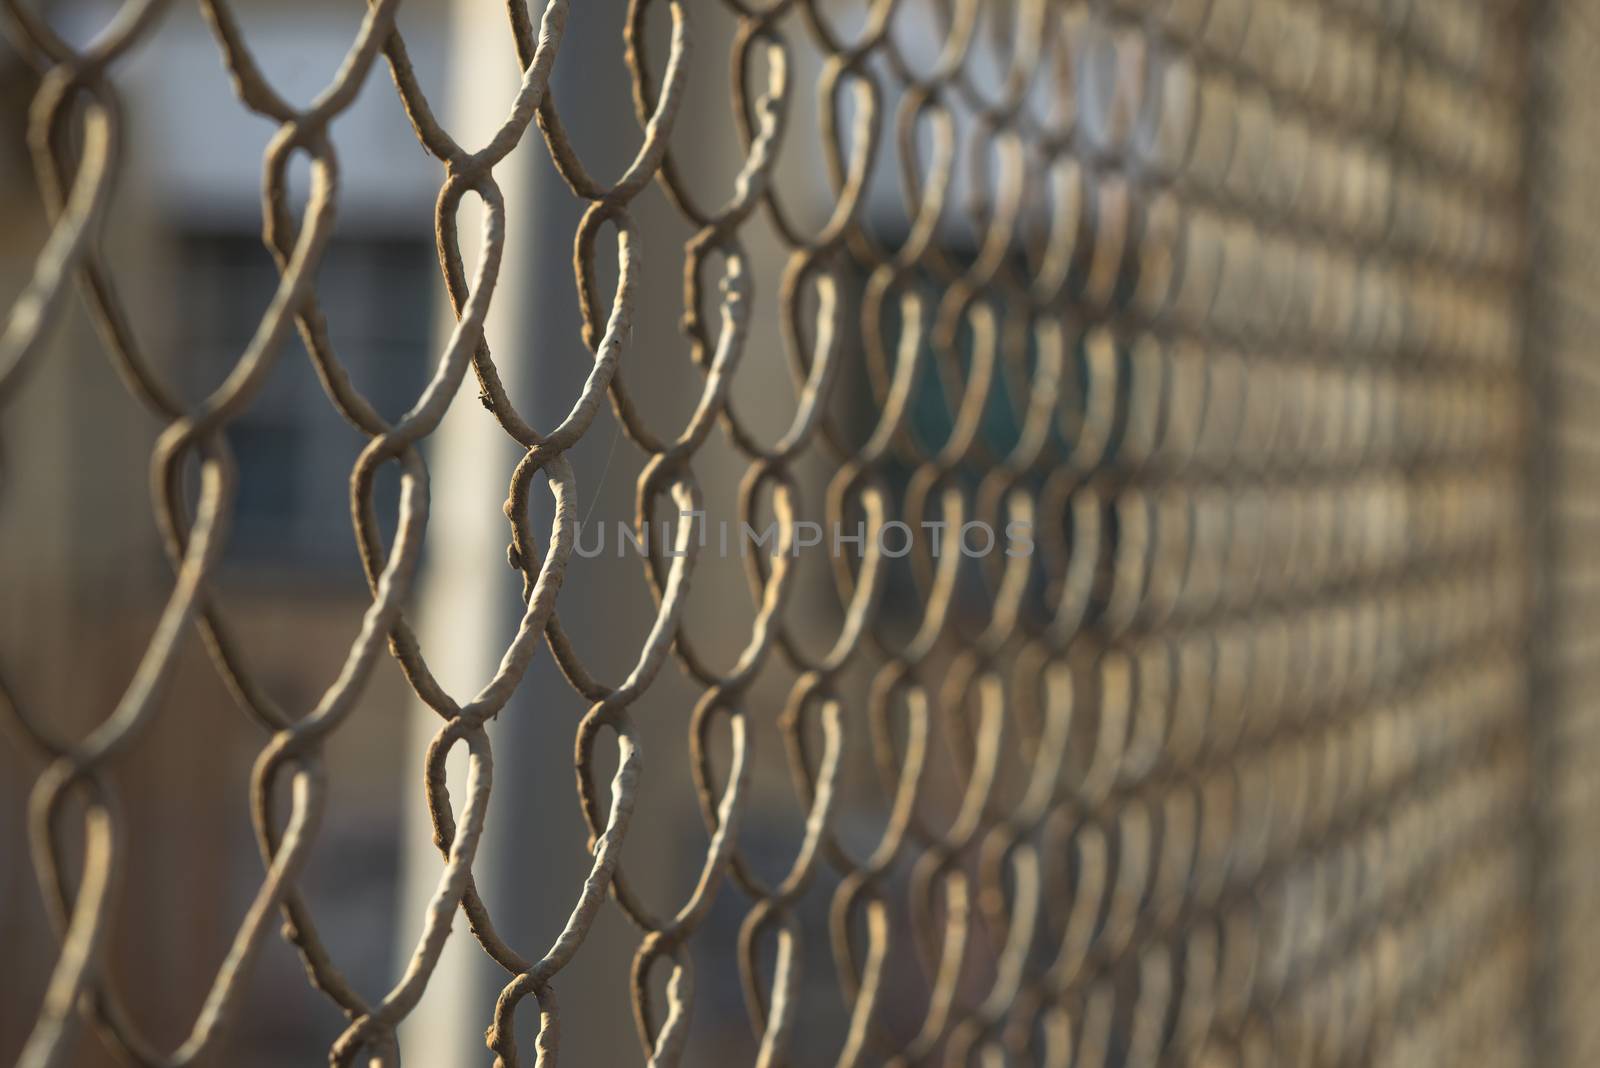 Metal mesh fence background by Deniskarpenkov